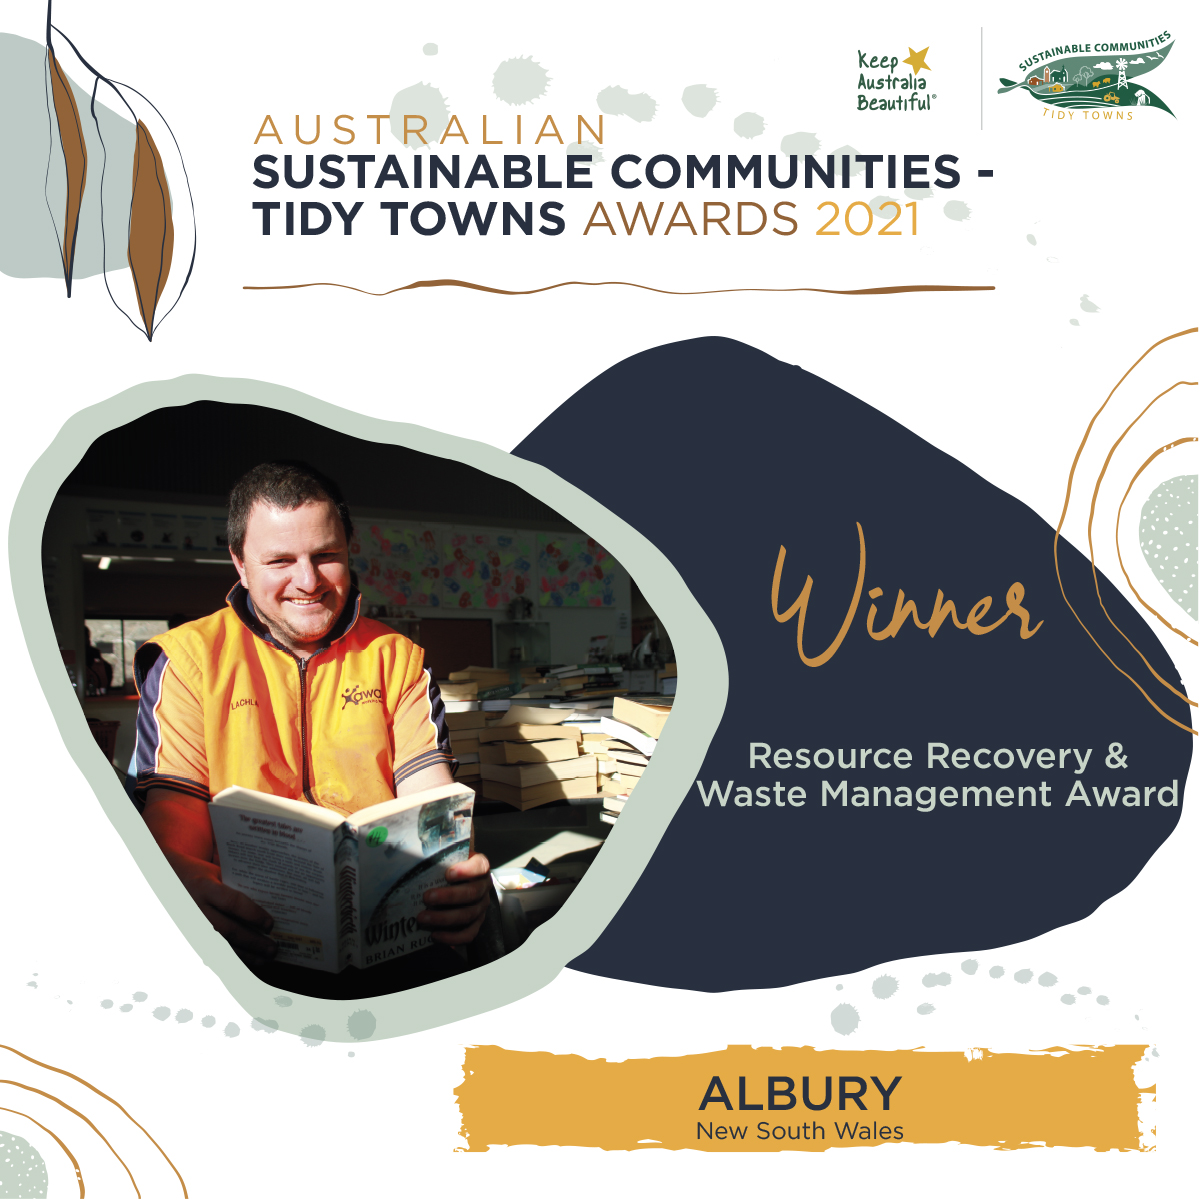 The Resource Recovery and Waste Management Award,  goes to Albury, NSW! 
#TidyTowns #sustainablecommunities #albury #alburycitycouncil @AlburyCity @bordermail @mmmtheborder @hittheborder @ABCGOulburnMurray @Radio2AY